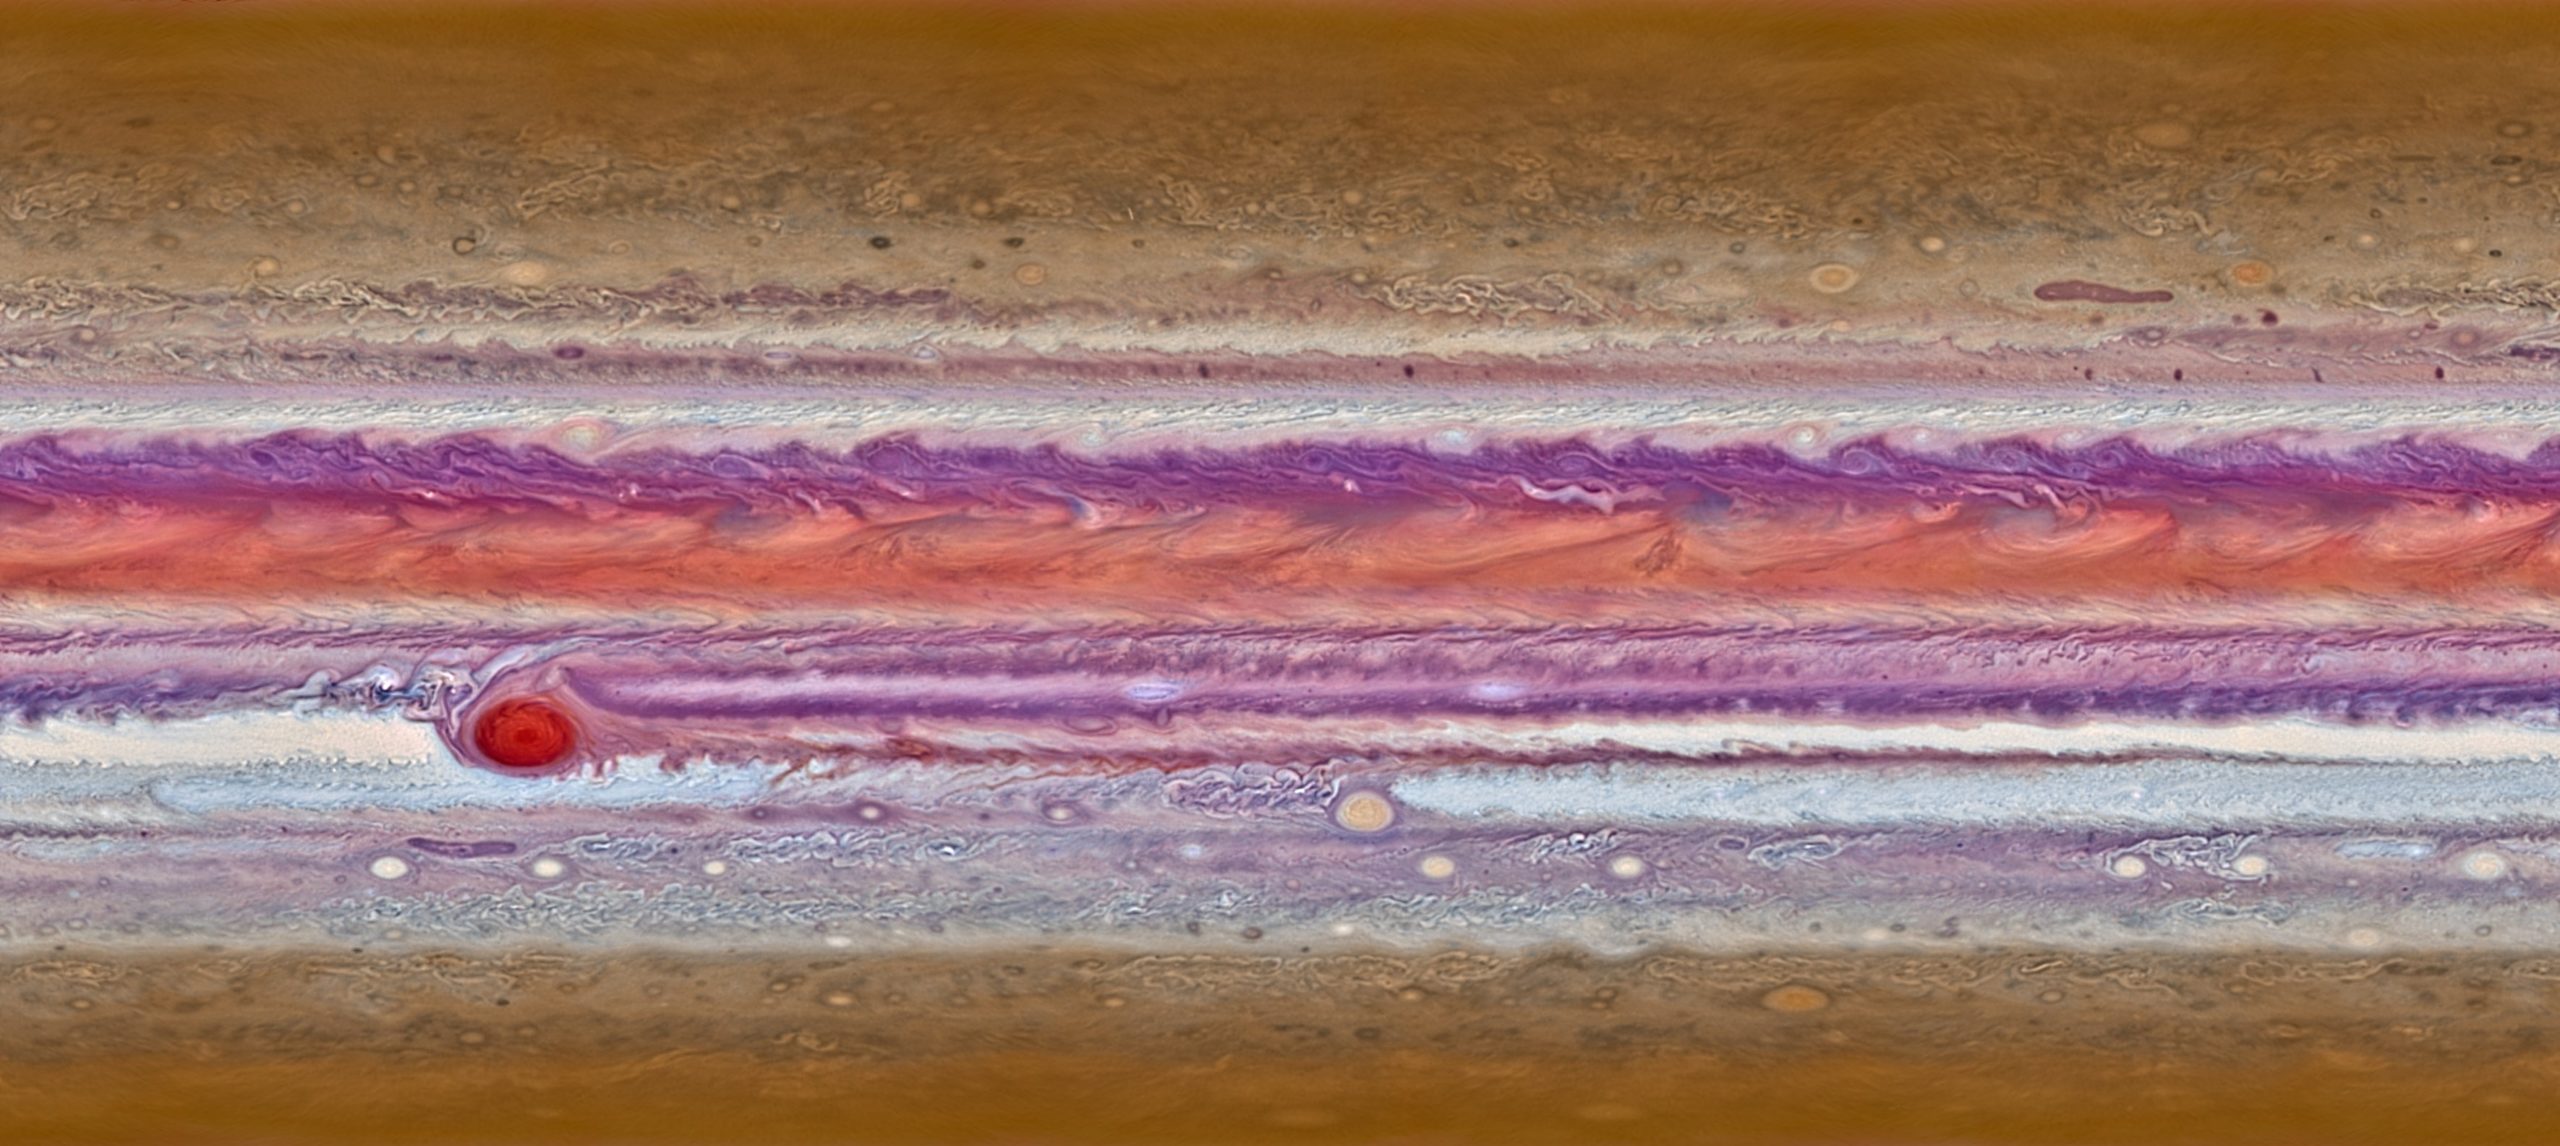 A dazzling panorama of Jupiter's bands. (Image: Sergio Díaz Ruiz)